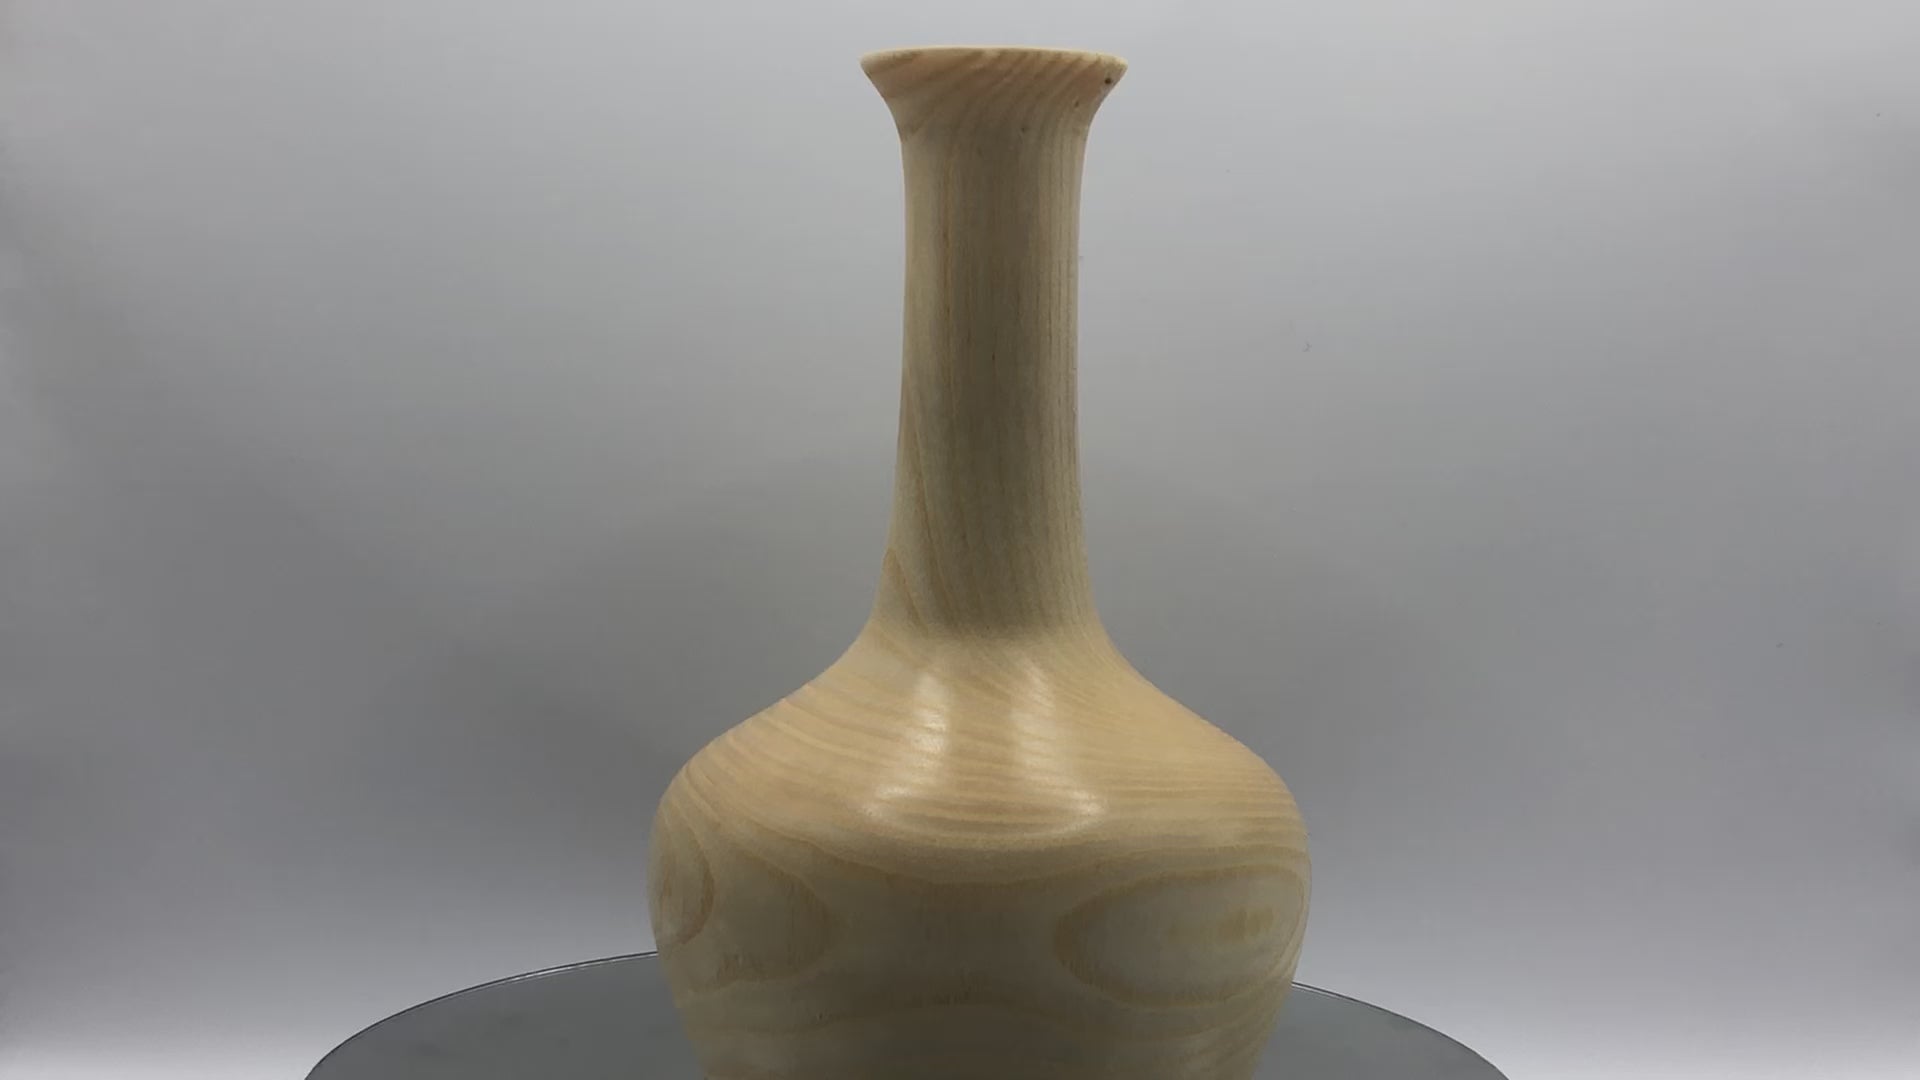 vase fabrication artisanale tournage sur bois type soliflore video